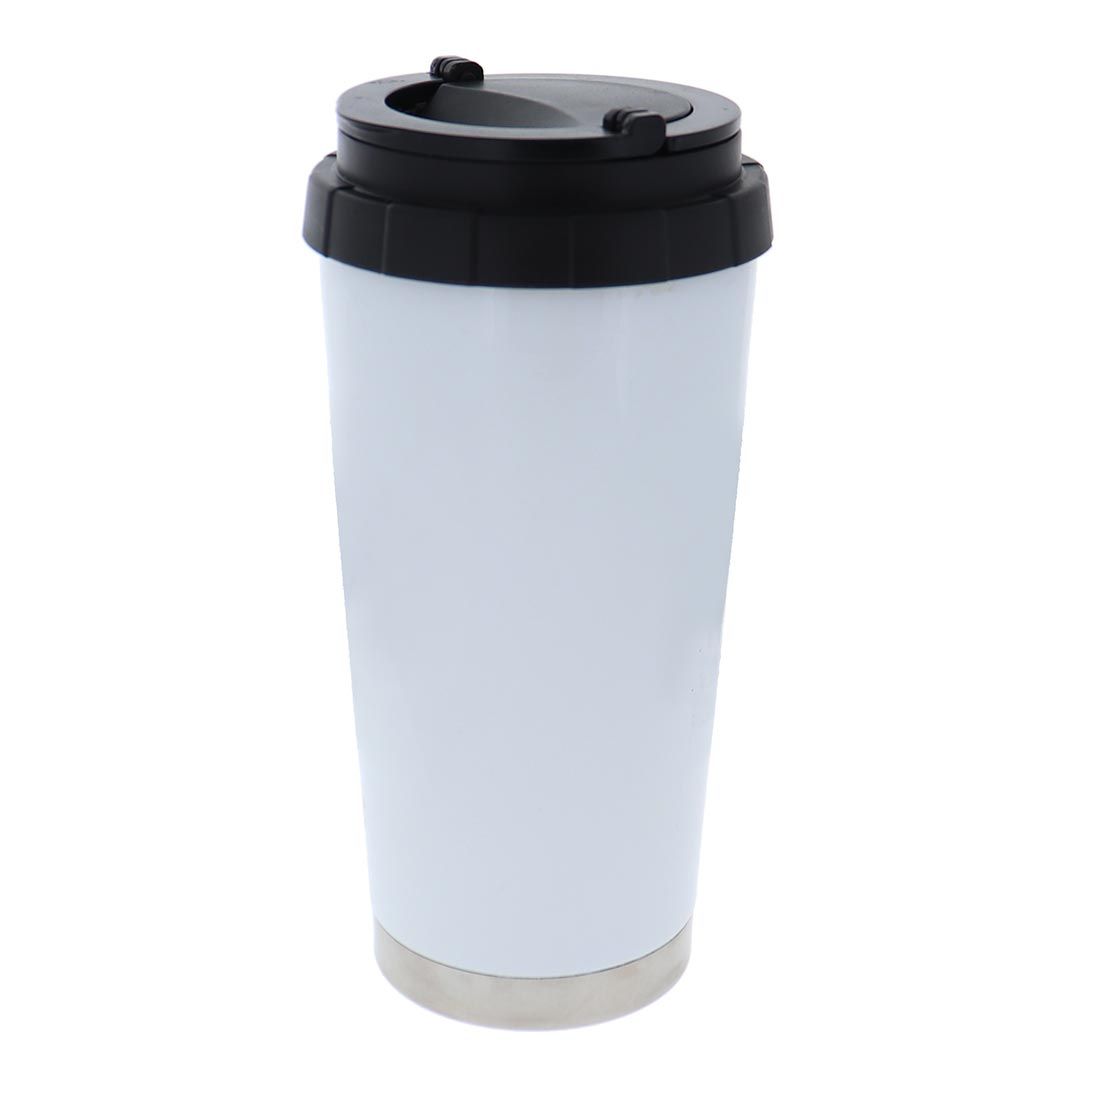 15 oz. Orca Stainless Steel Coffee Mug - White